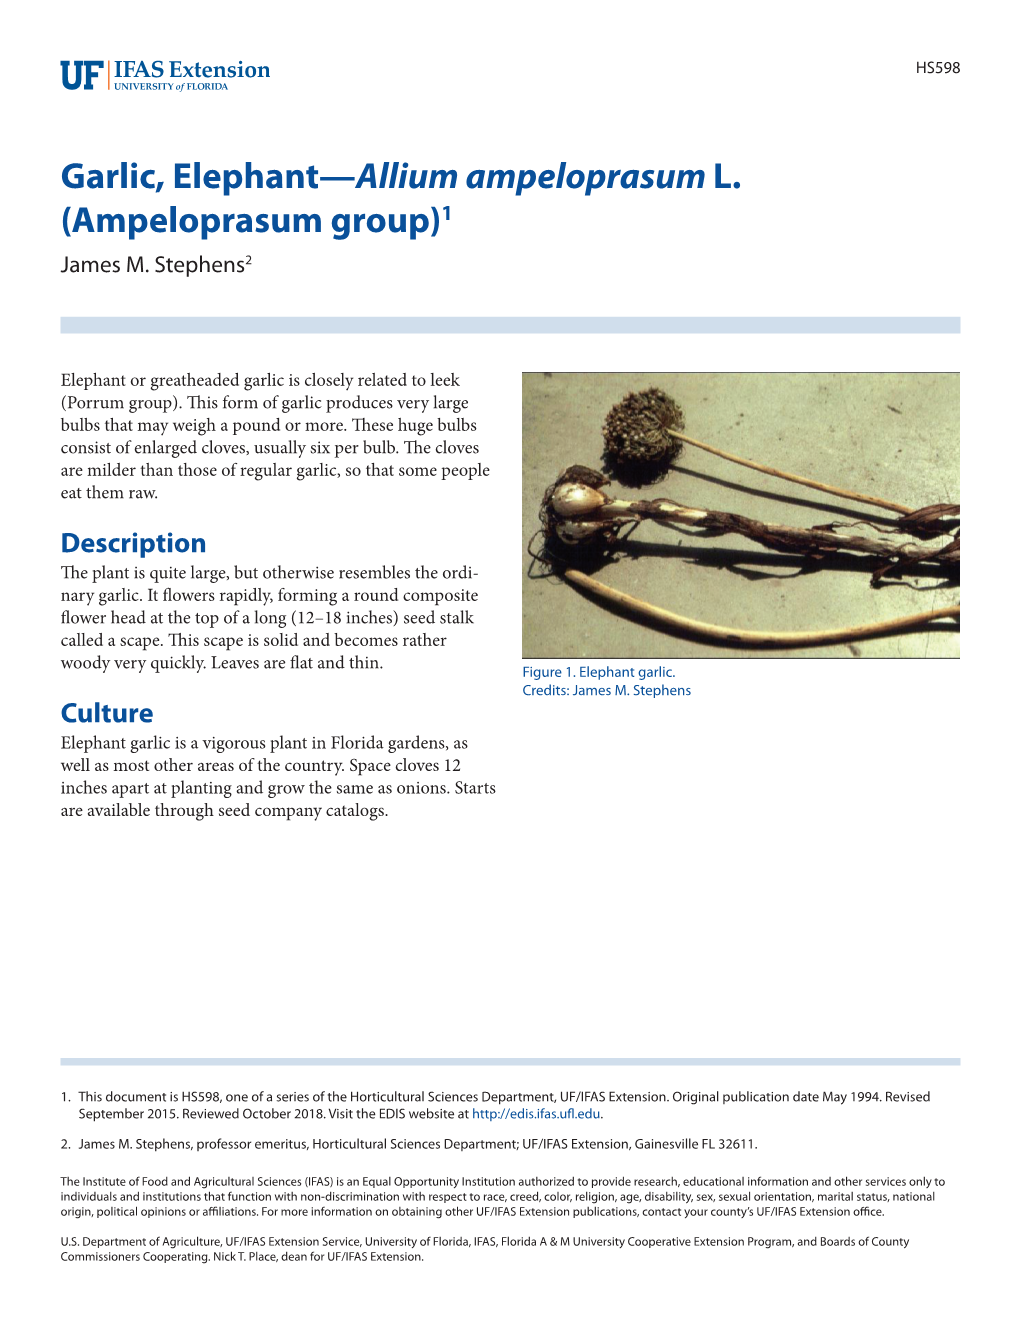 Garlic, Elephant—Allium Ampeloprasum L. (Ampeloprasum Group)1 James M